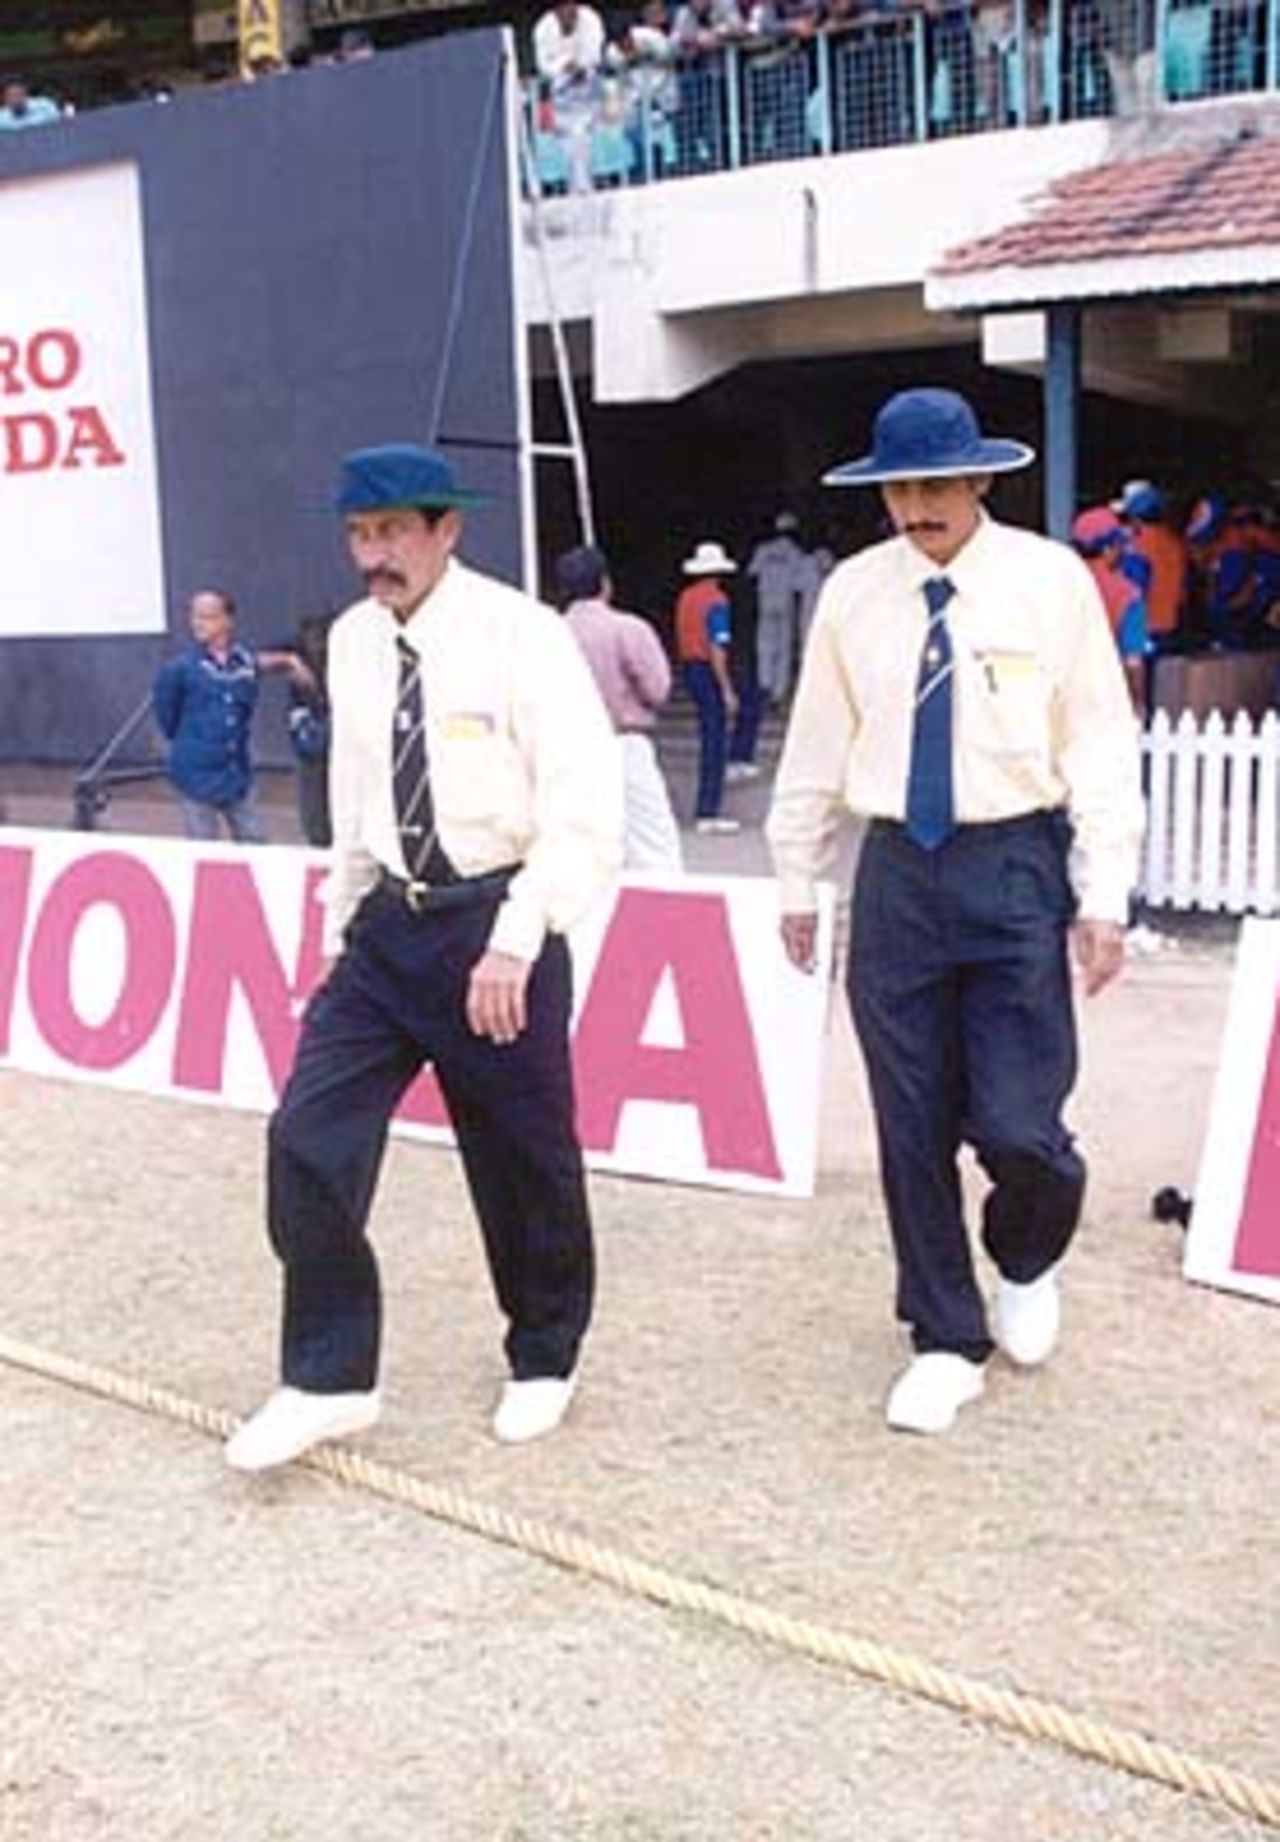 The umpires SK Tarapore and S Lakshmanan make their way into the middle. Challenger Series 2000/01, India v India 'B' at MA Chidambaram Stadium, Chepauk, Chennai, 13 Feb 2001